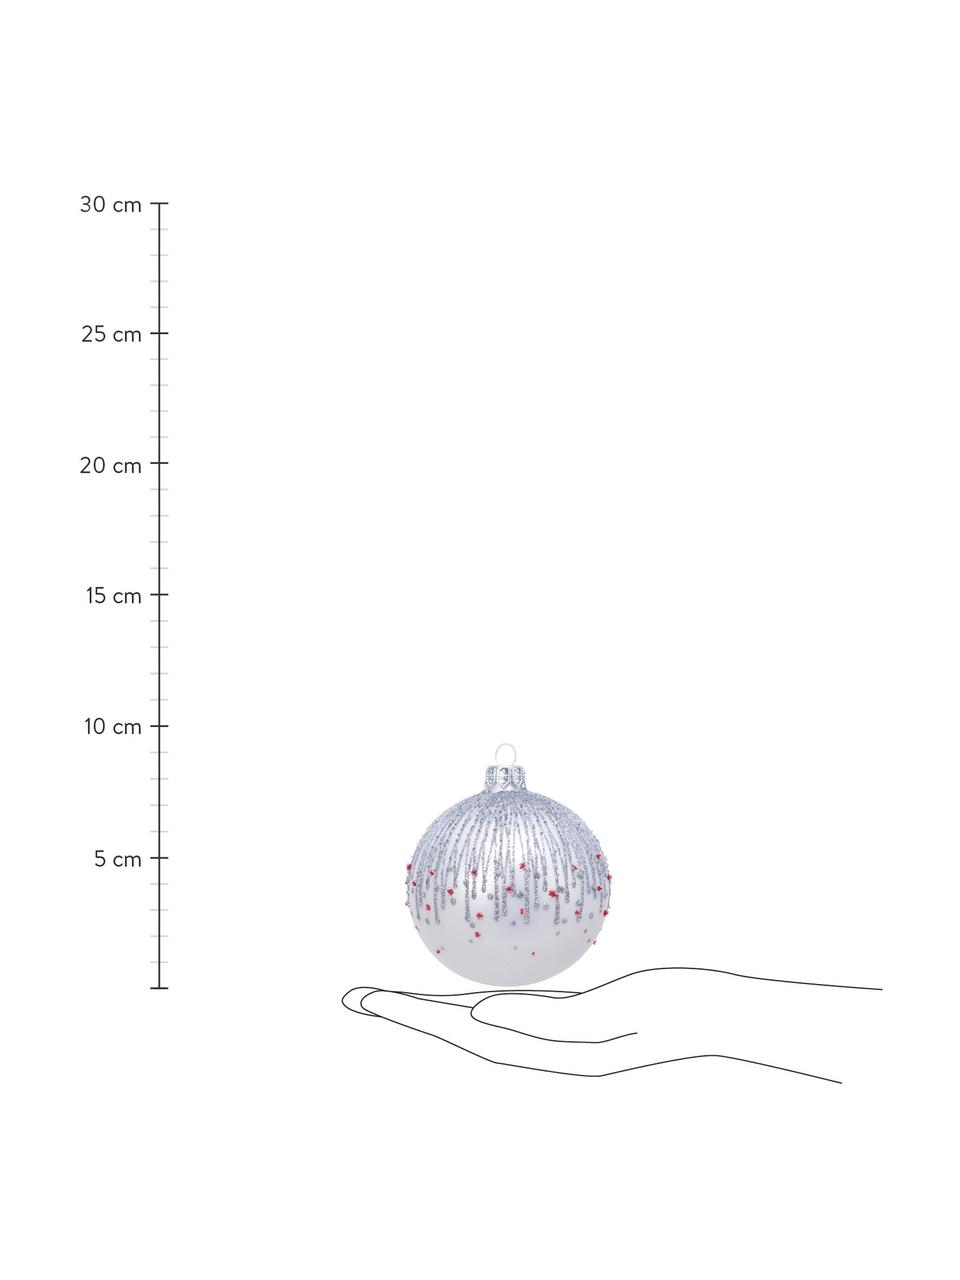 Weihnachtskugeln Aniela, 2 Stück, Weiß, Silberfarben, Rot, Ø 8 cm